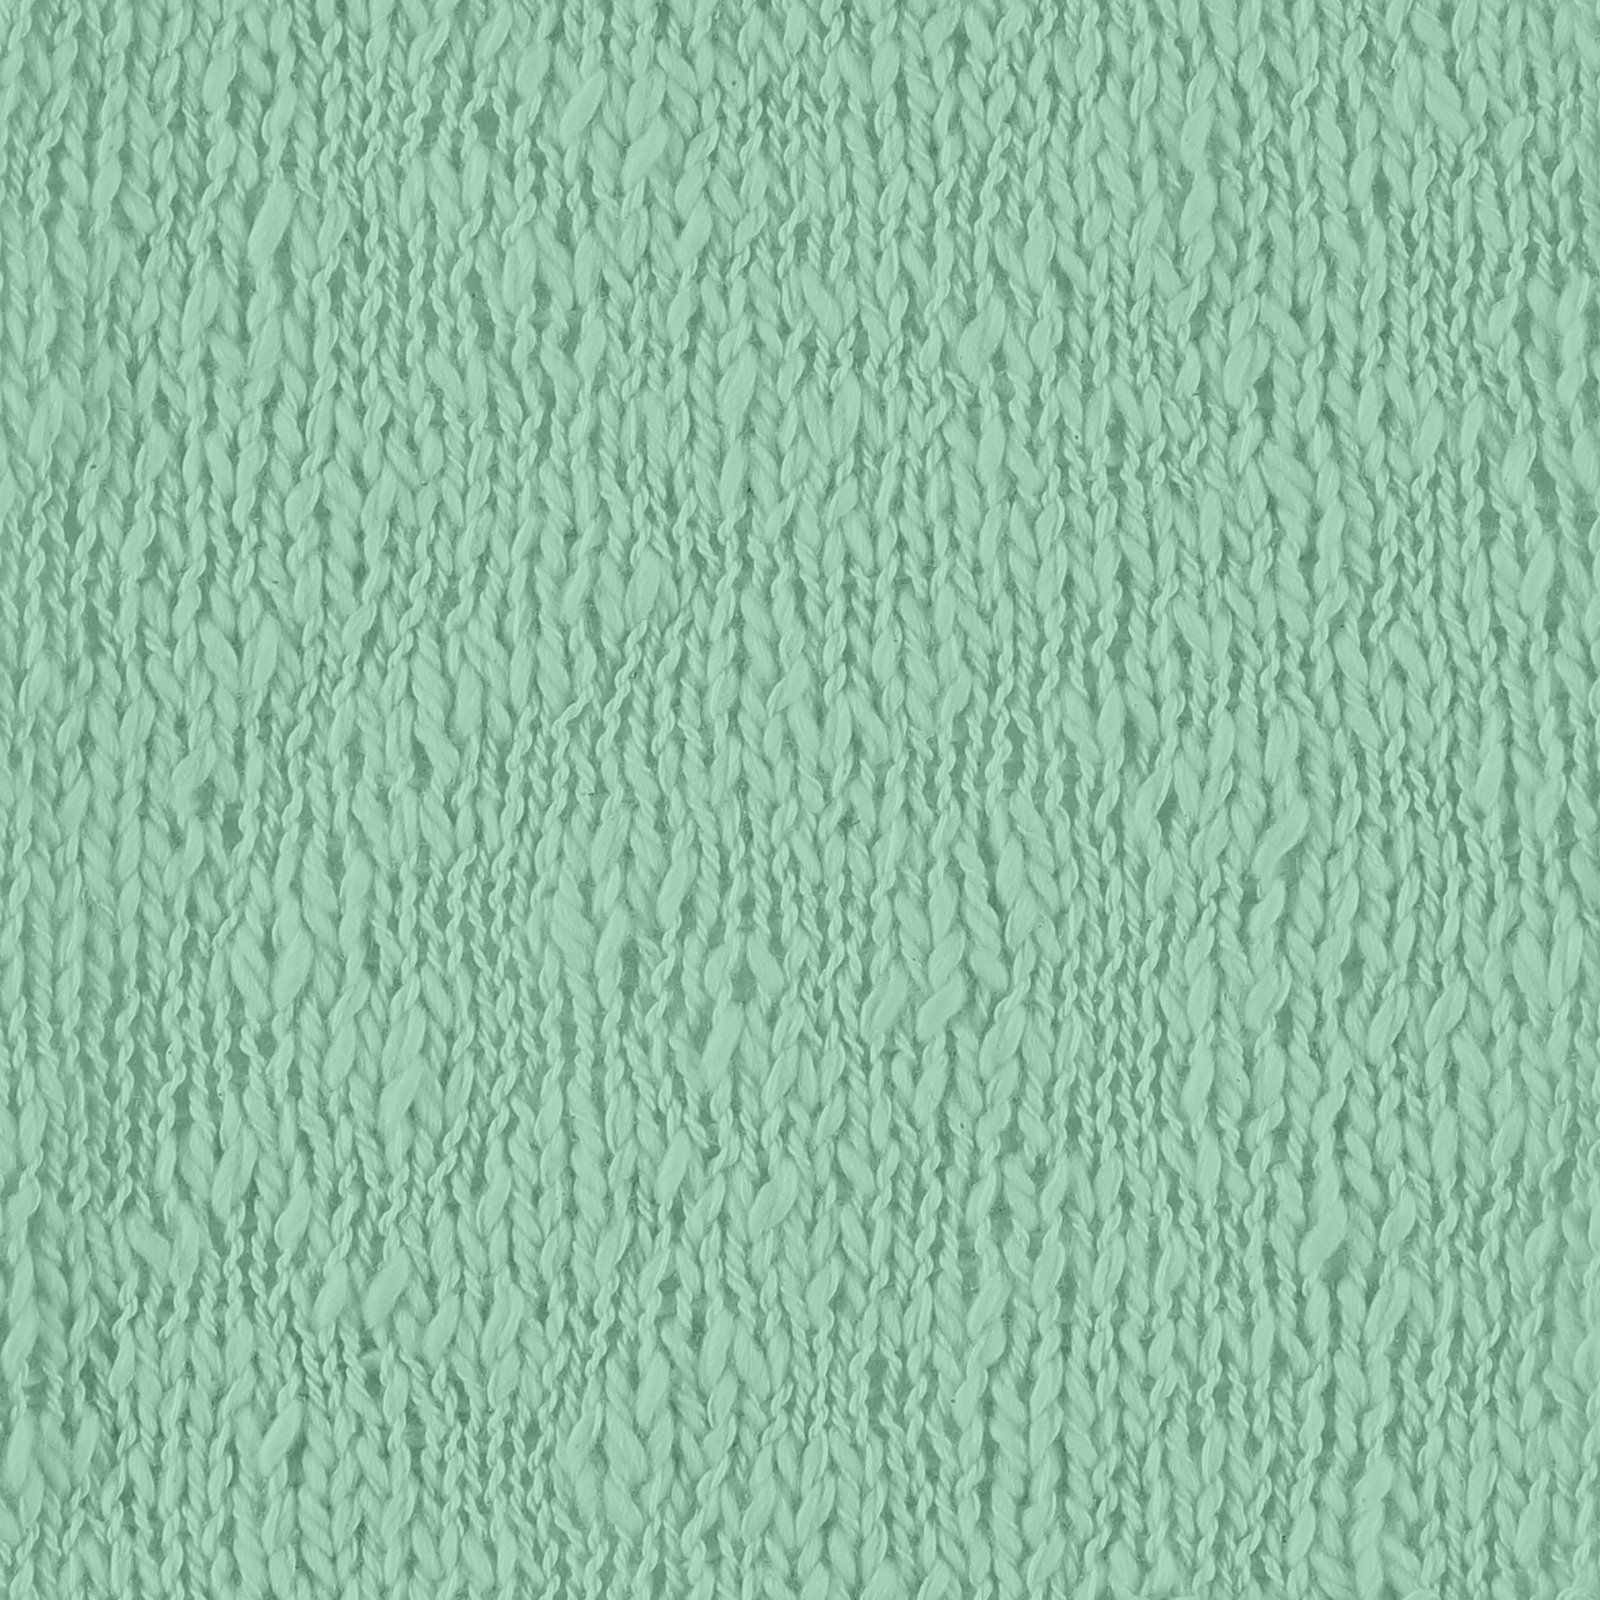 FRAYA, textured cotton yarn "Wavy", mint green 90000938_sskit